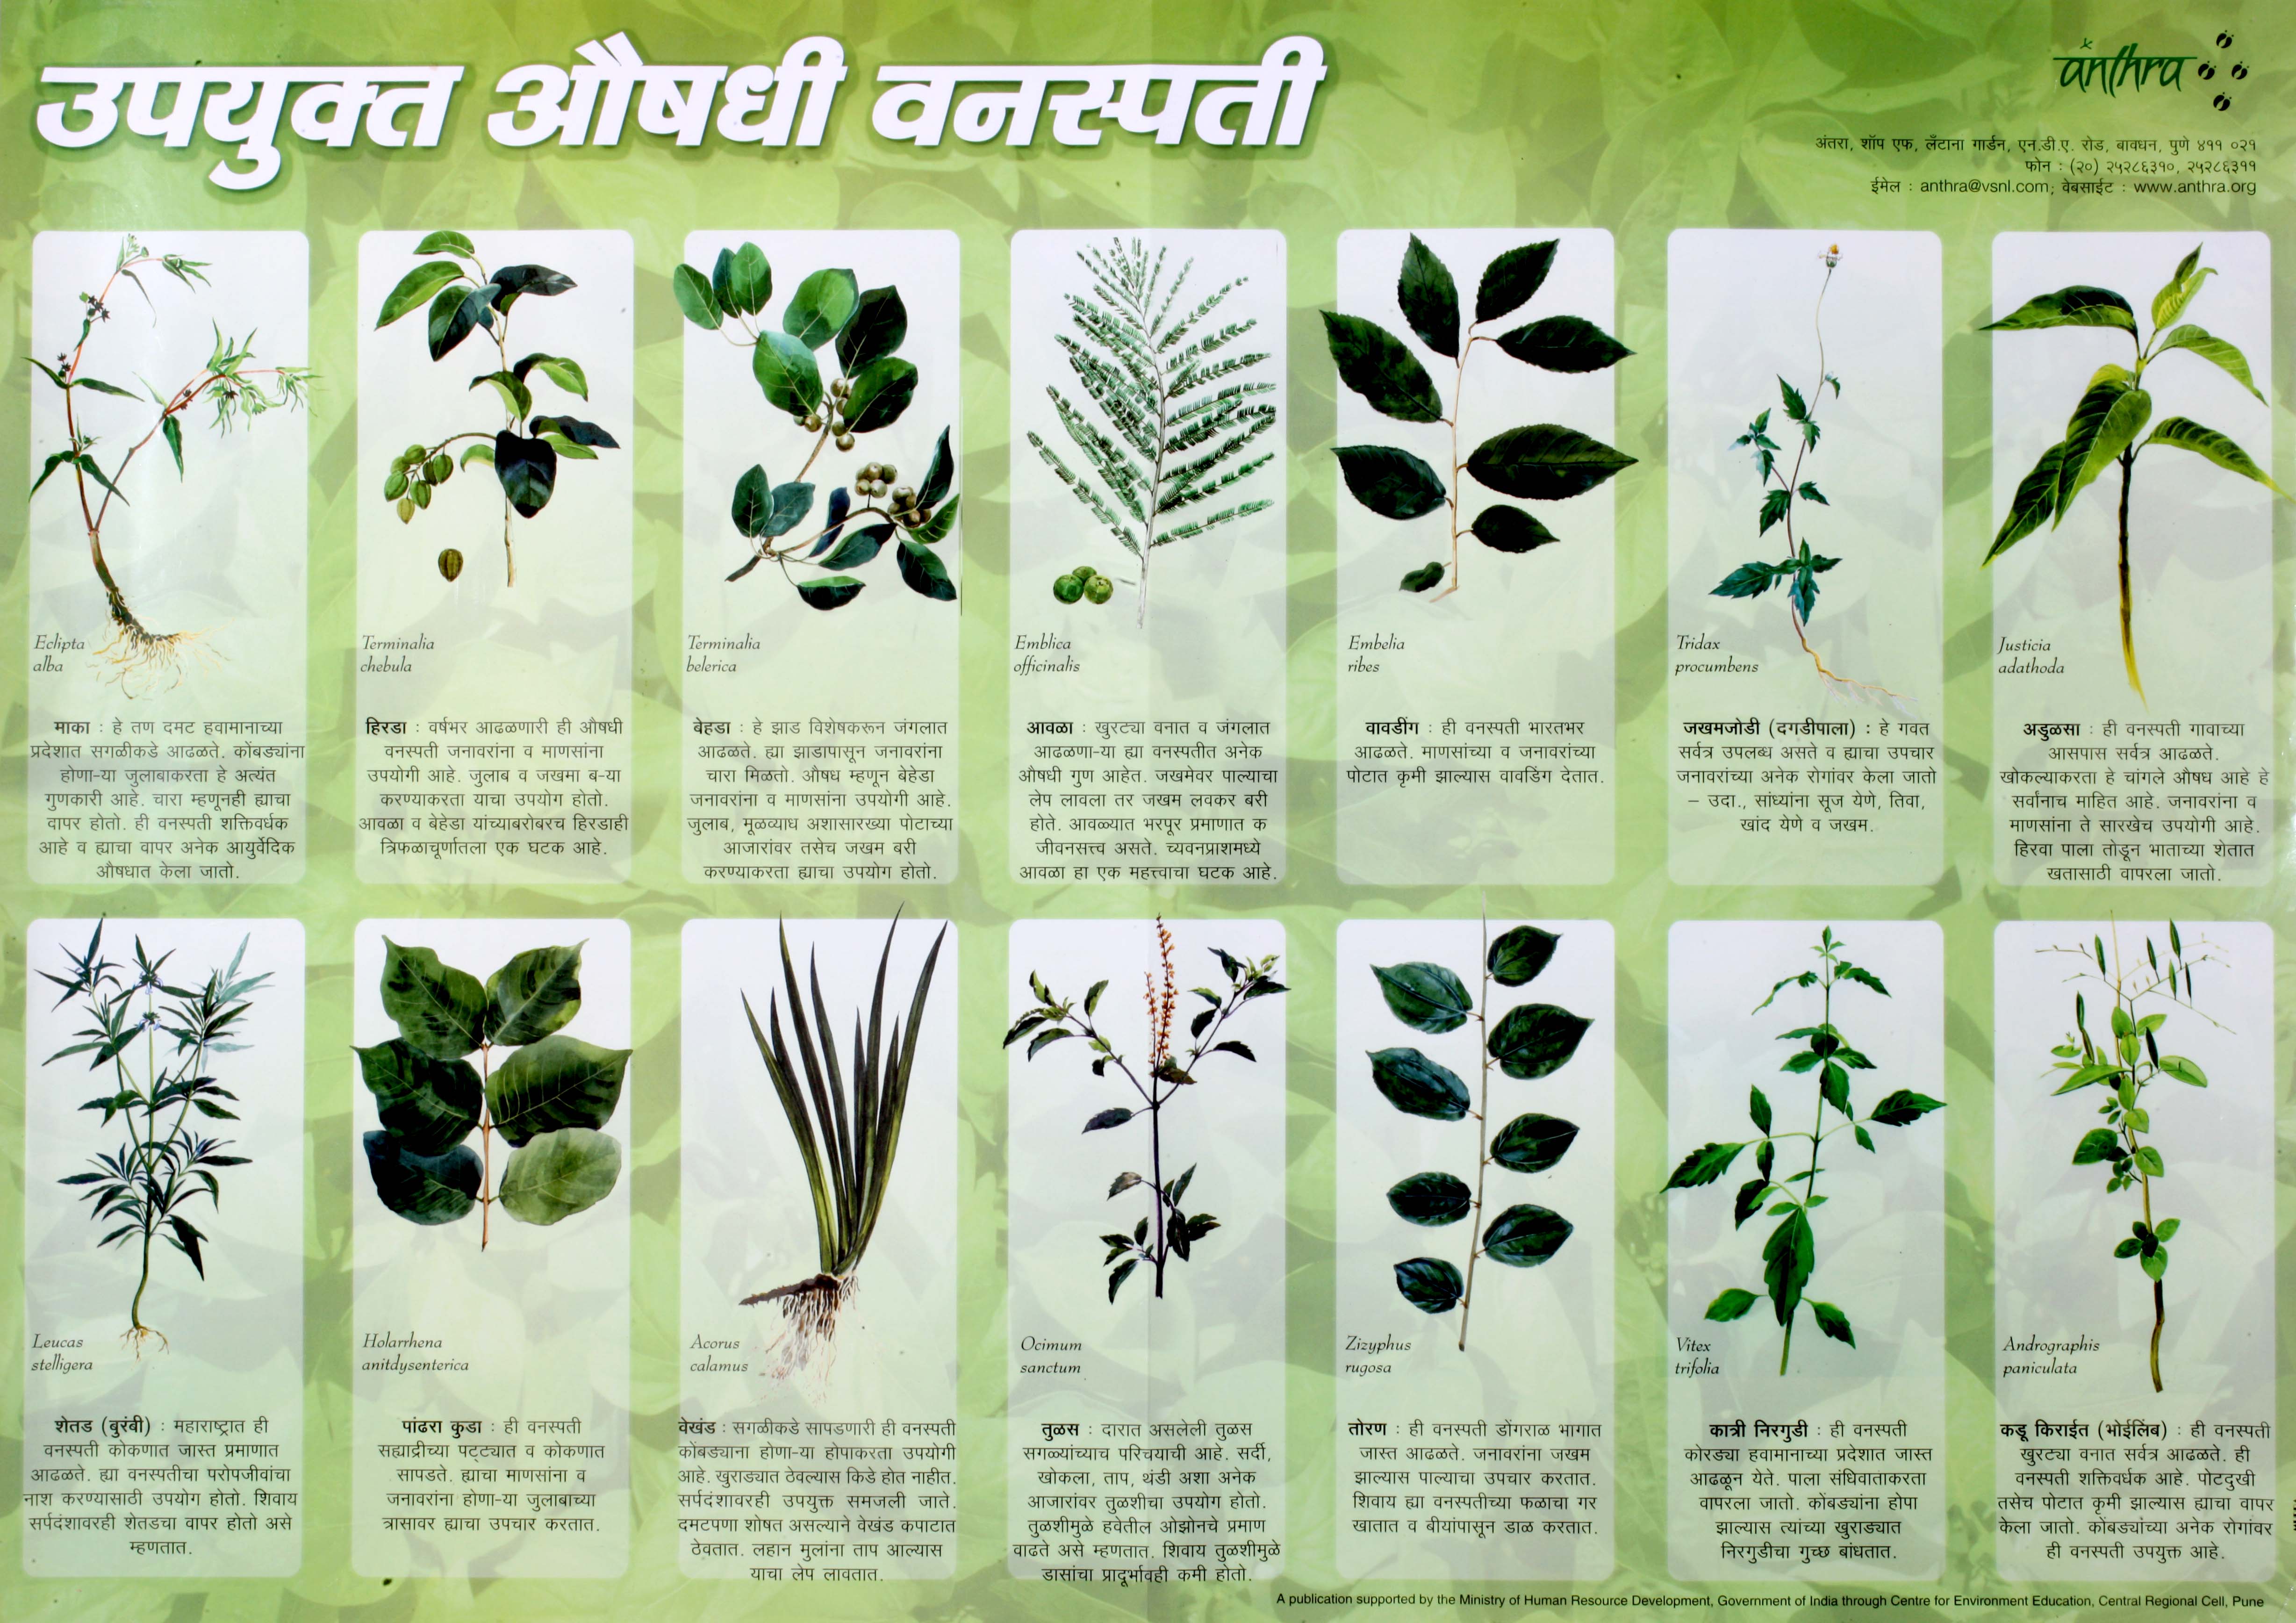 Upyukta Aushadi Va chara Vanaspati (Useful Medicinal and Fodder Plants) -  Anthra livestock development & ethnoveterinary group